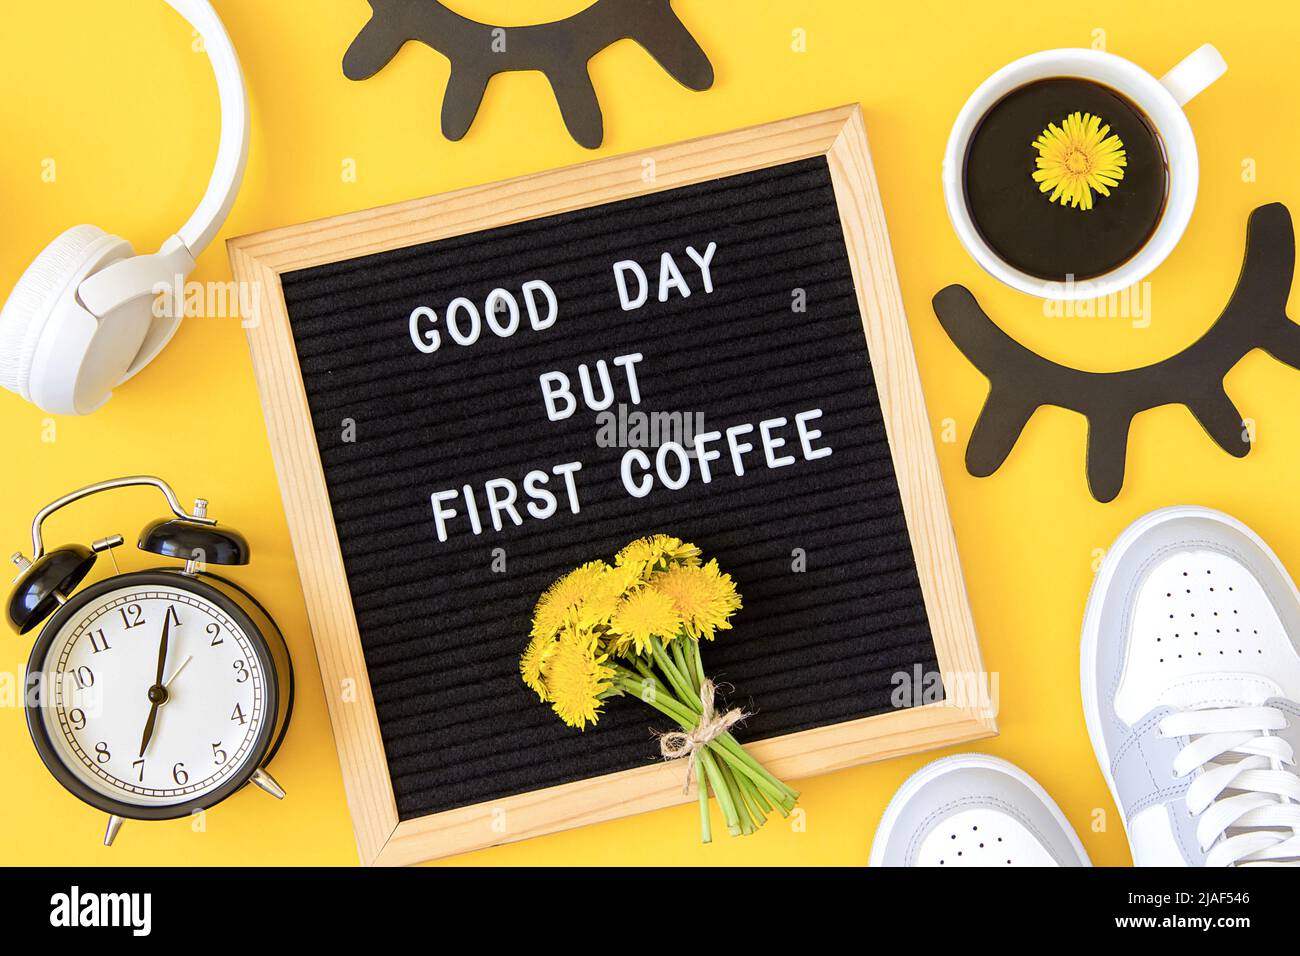 Buen día pero primer café. Cita motivacional en tablón de cartas, flores amarillas ramo y taza de café sobre fondo amarillo. Concepto inspirador qu Foto de stock